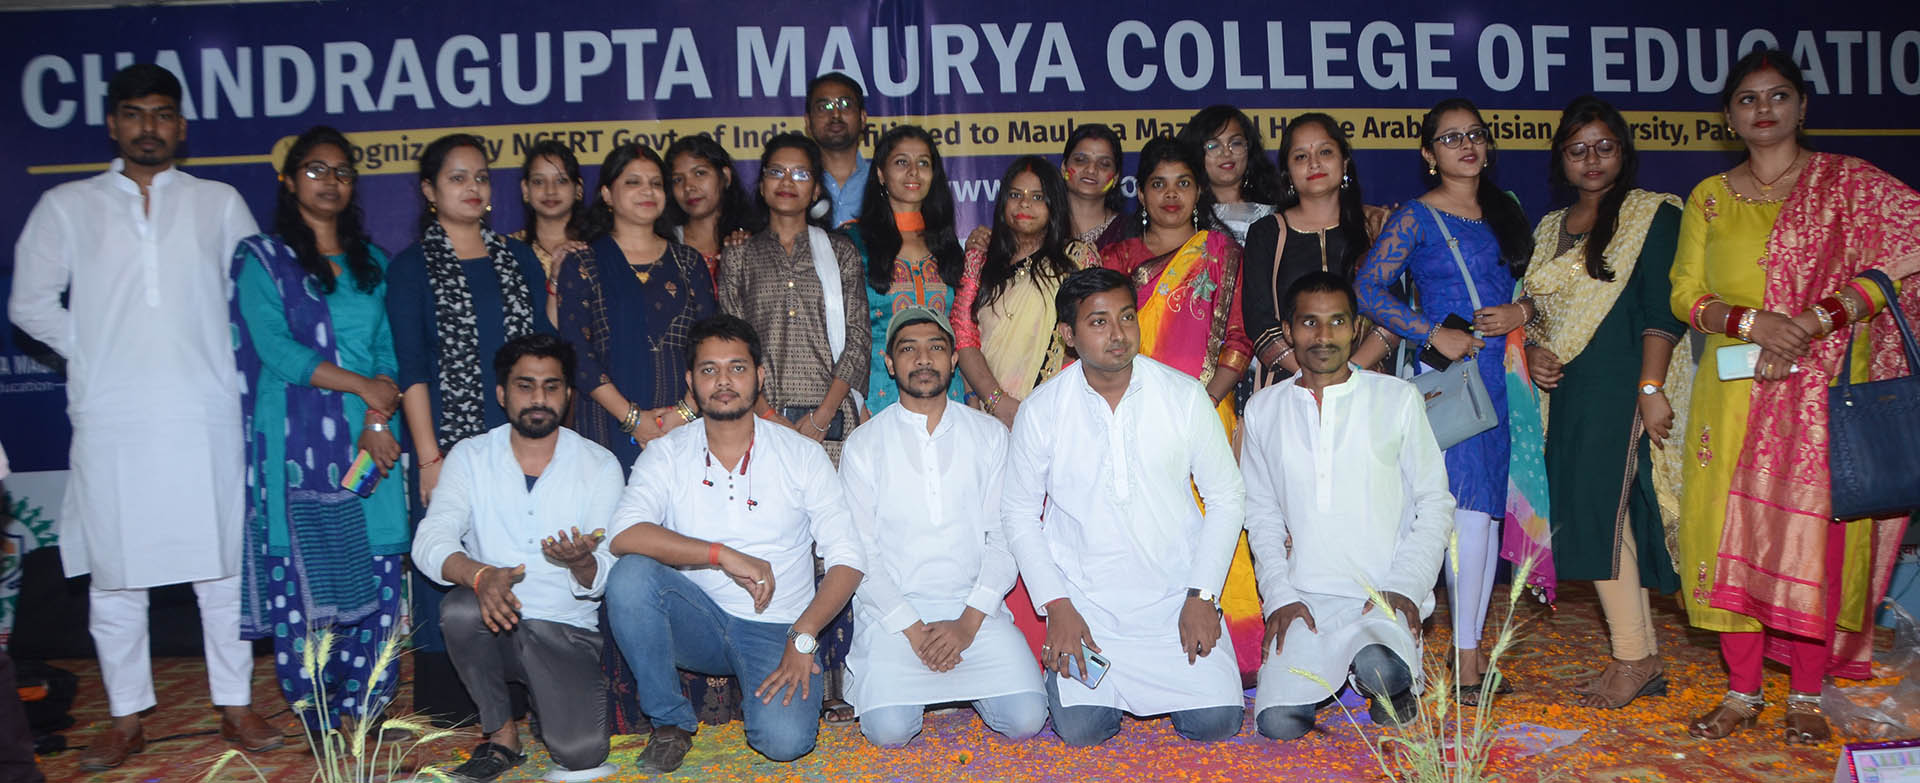 Chadragupta Maurya College of Education